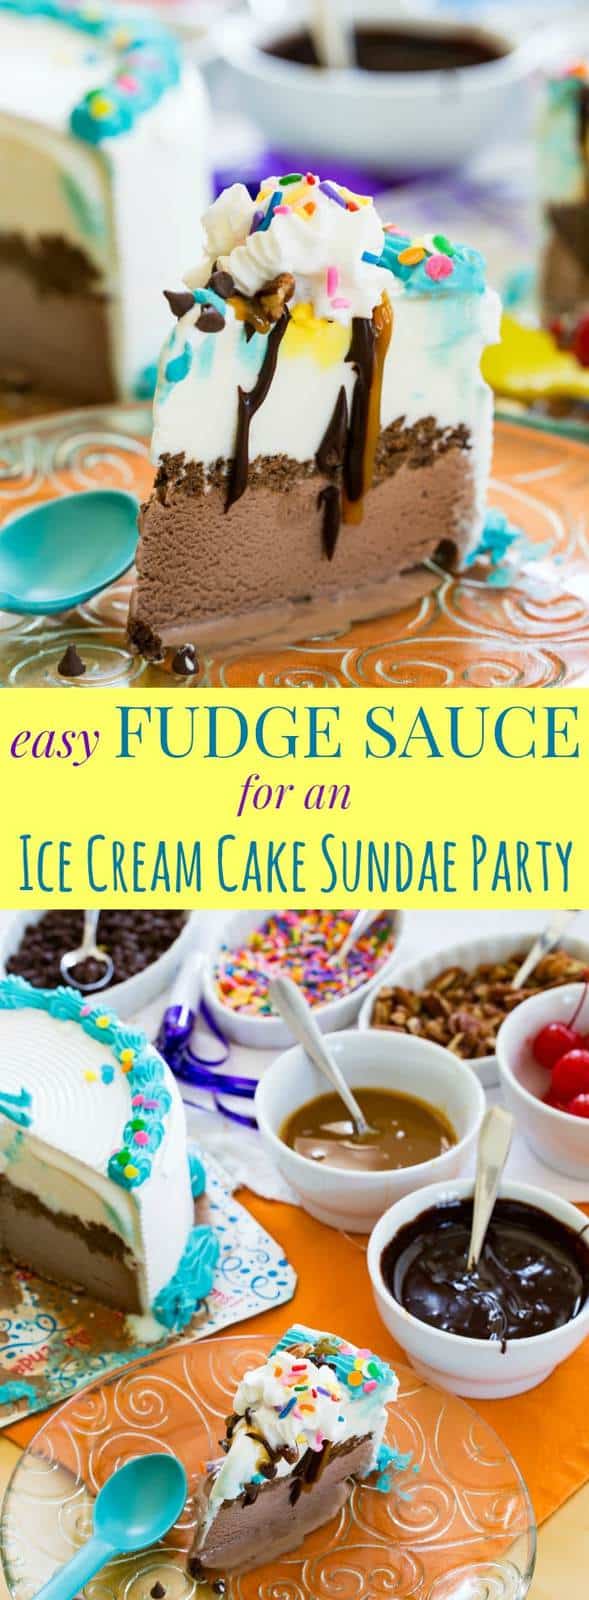 Ice Cream Cake Sundae Party and Easy Fudge Sauce Recipe - 589 x 1600 jpeg 82kB